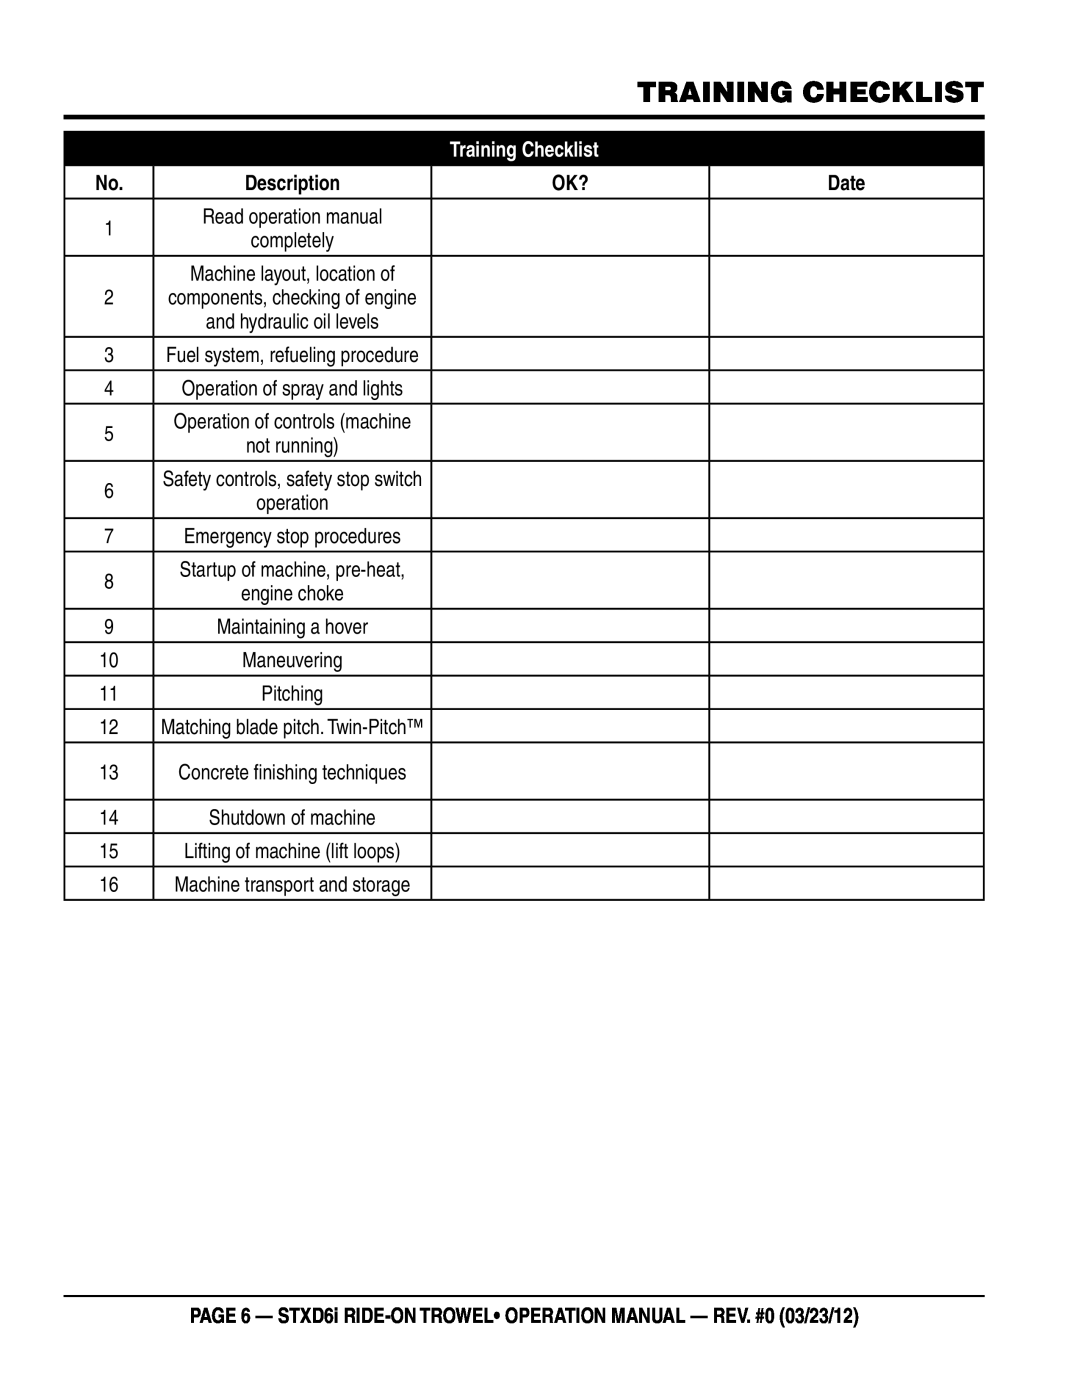 Multiquip STXD6i operation manual training checklist, Training checklist, description, date 